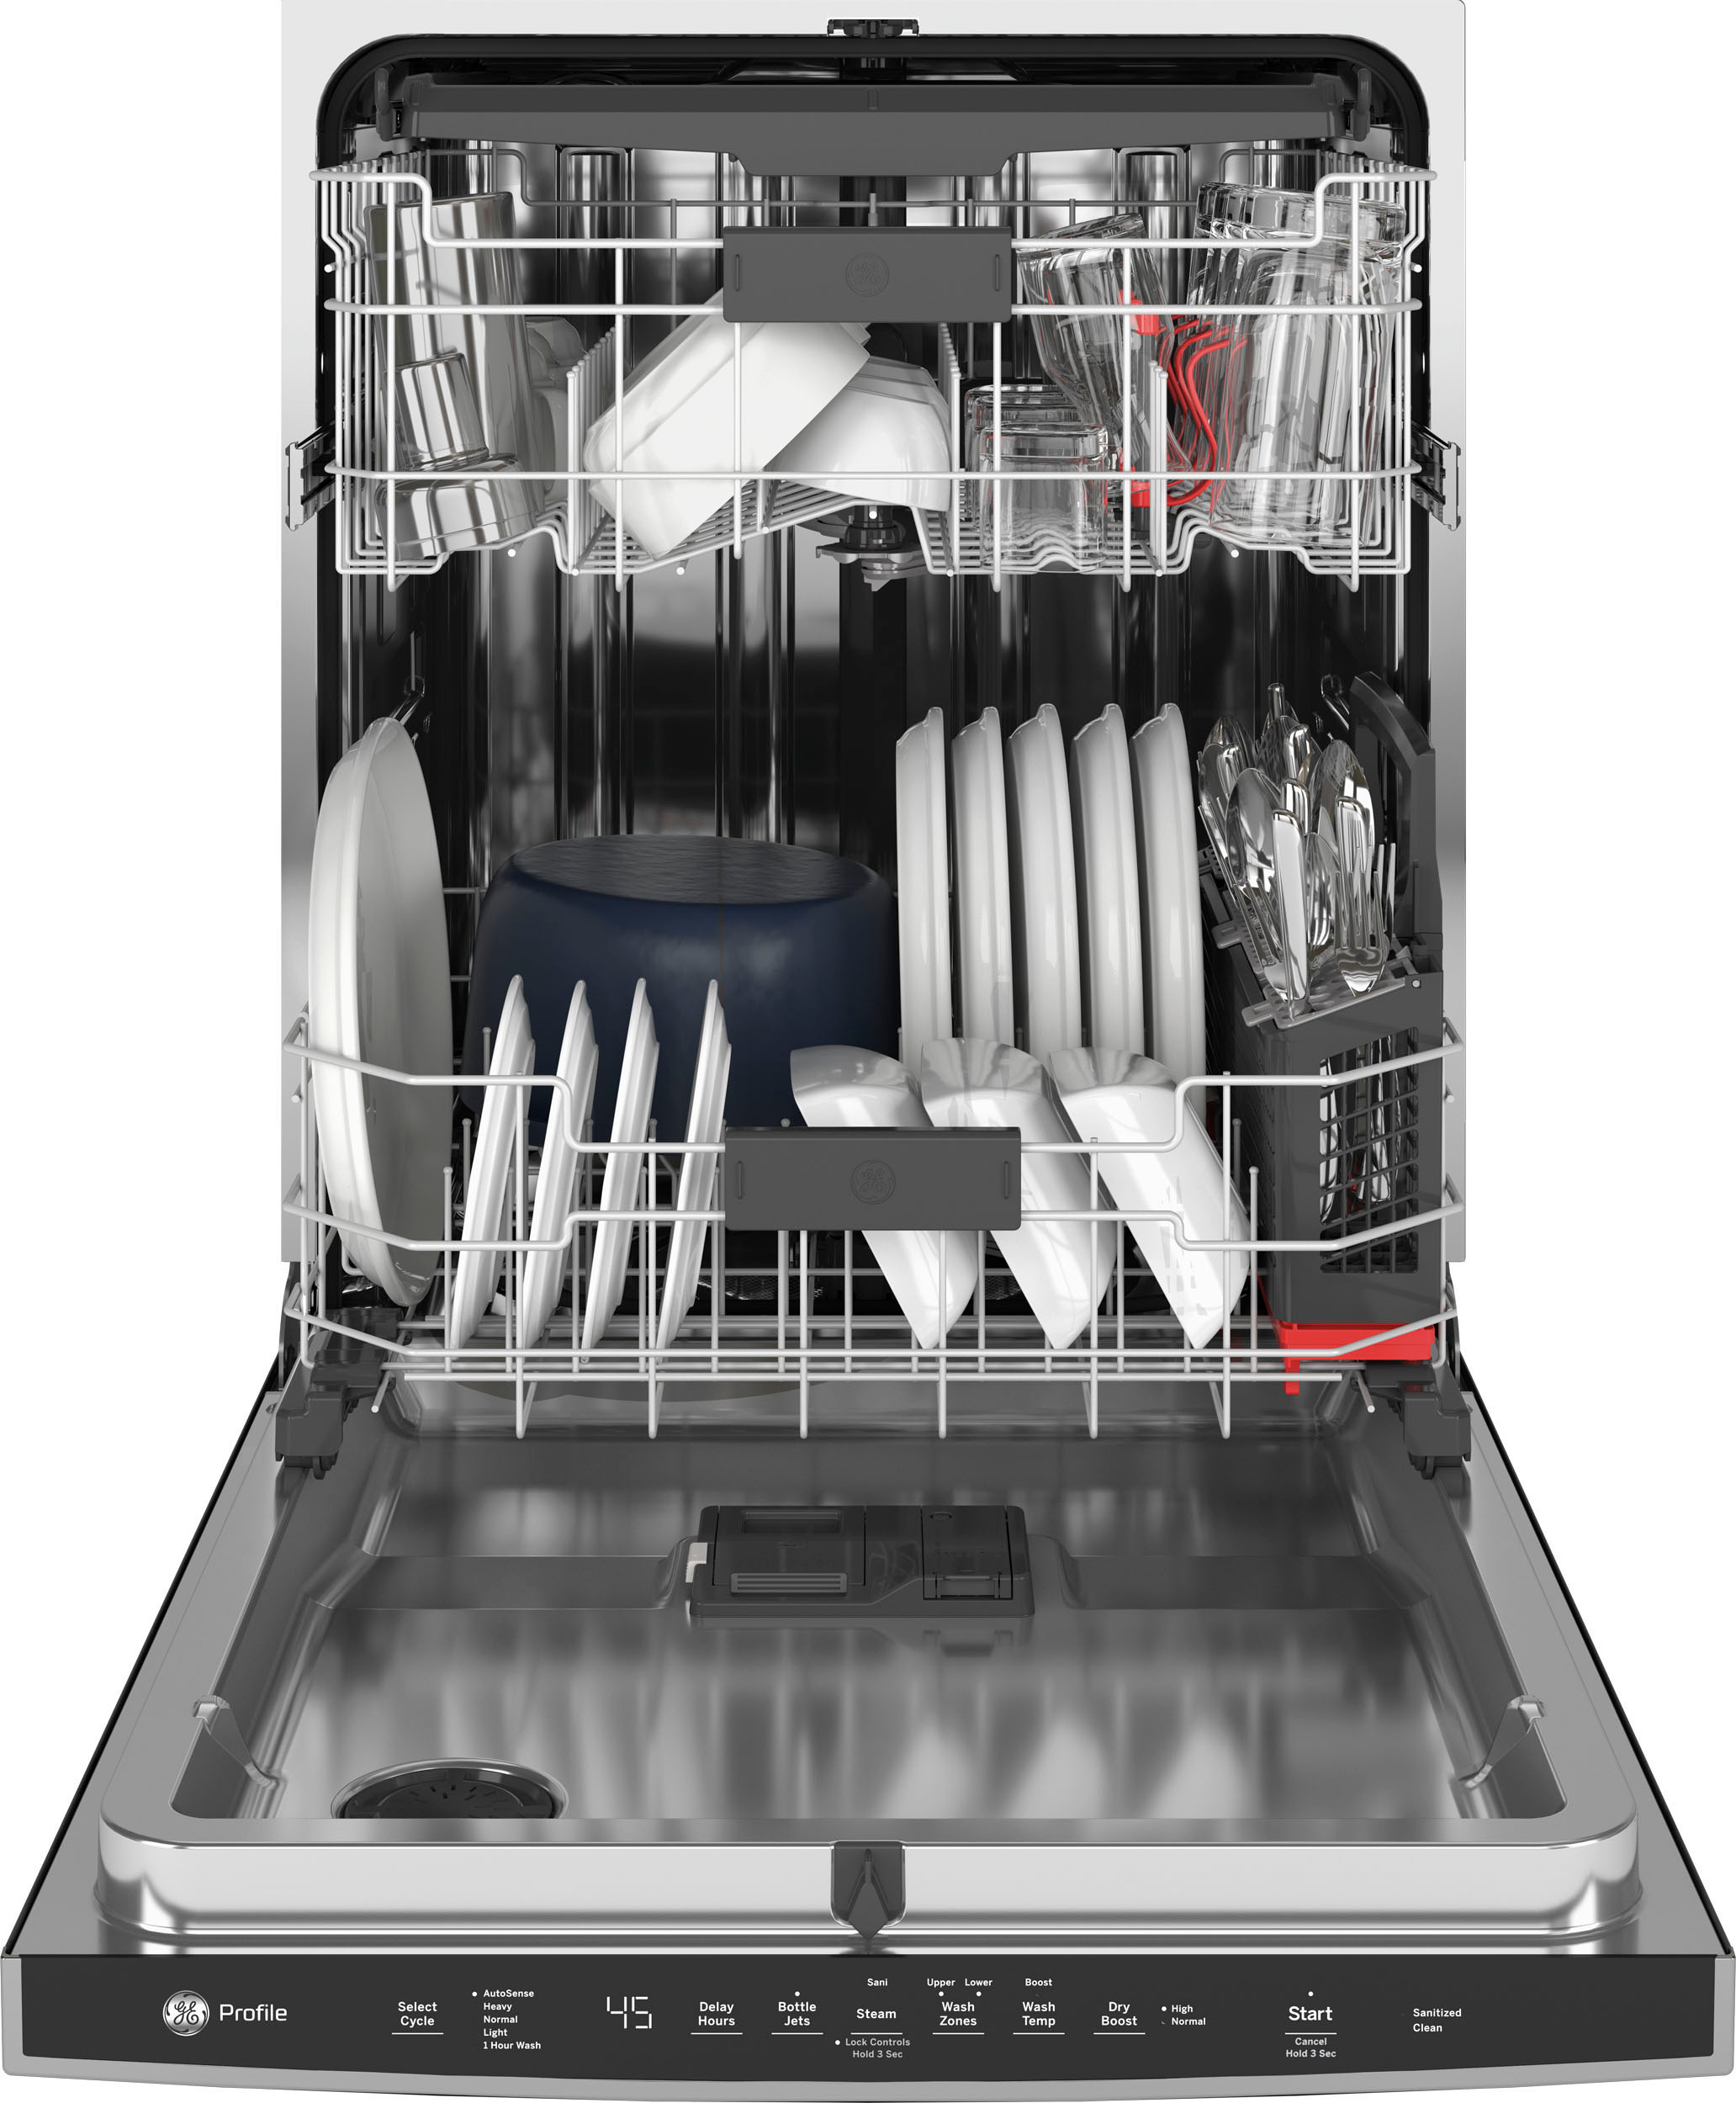 How To Start Ge Dishwasher